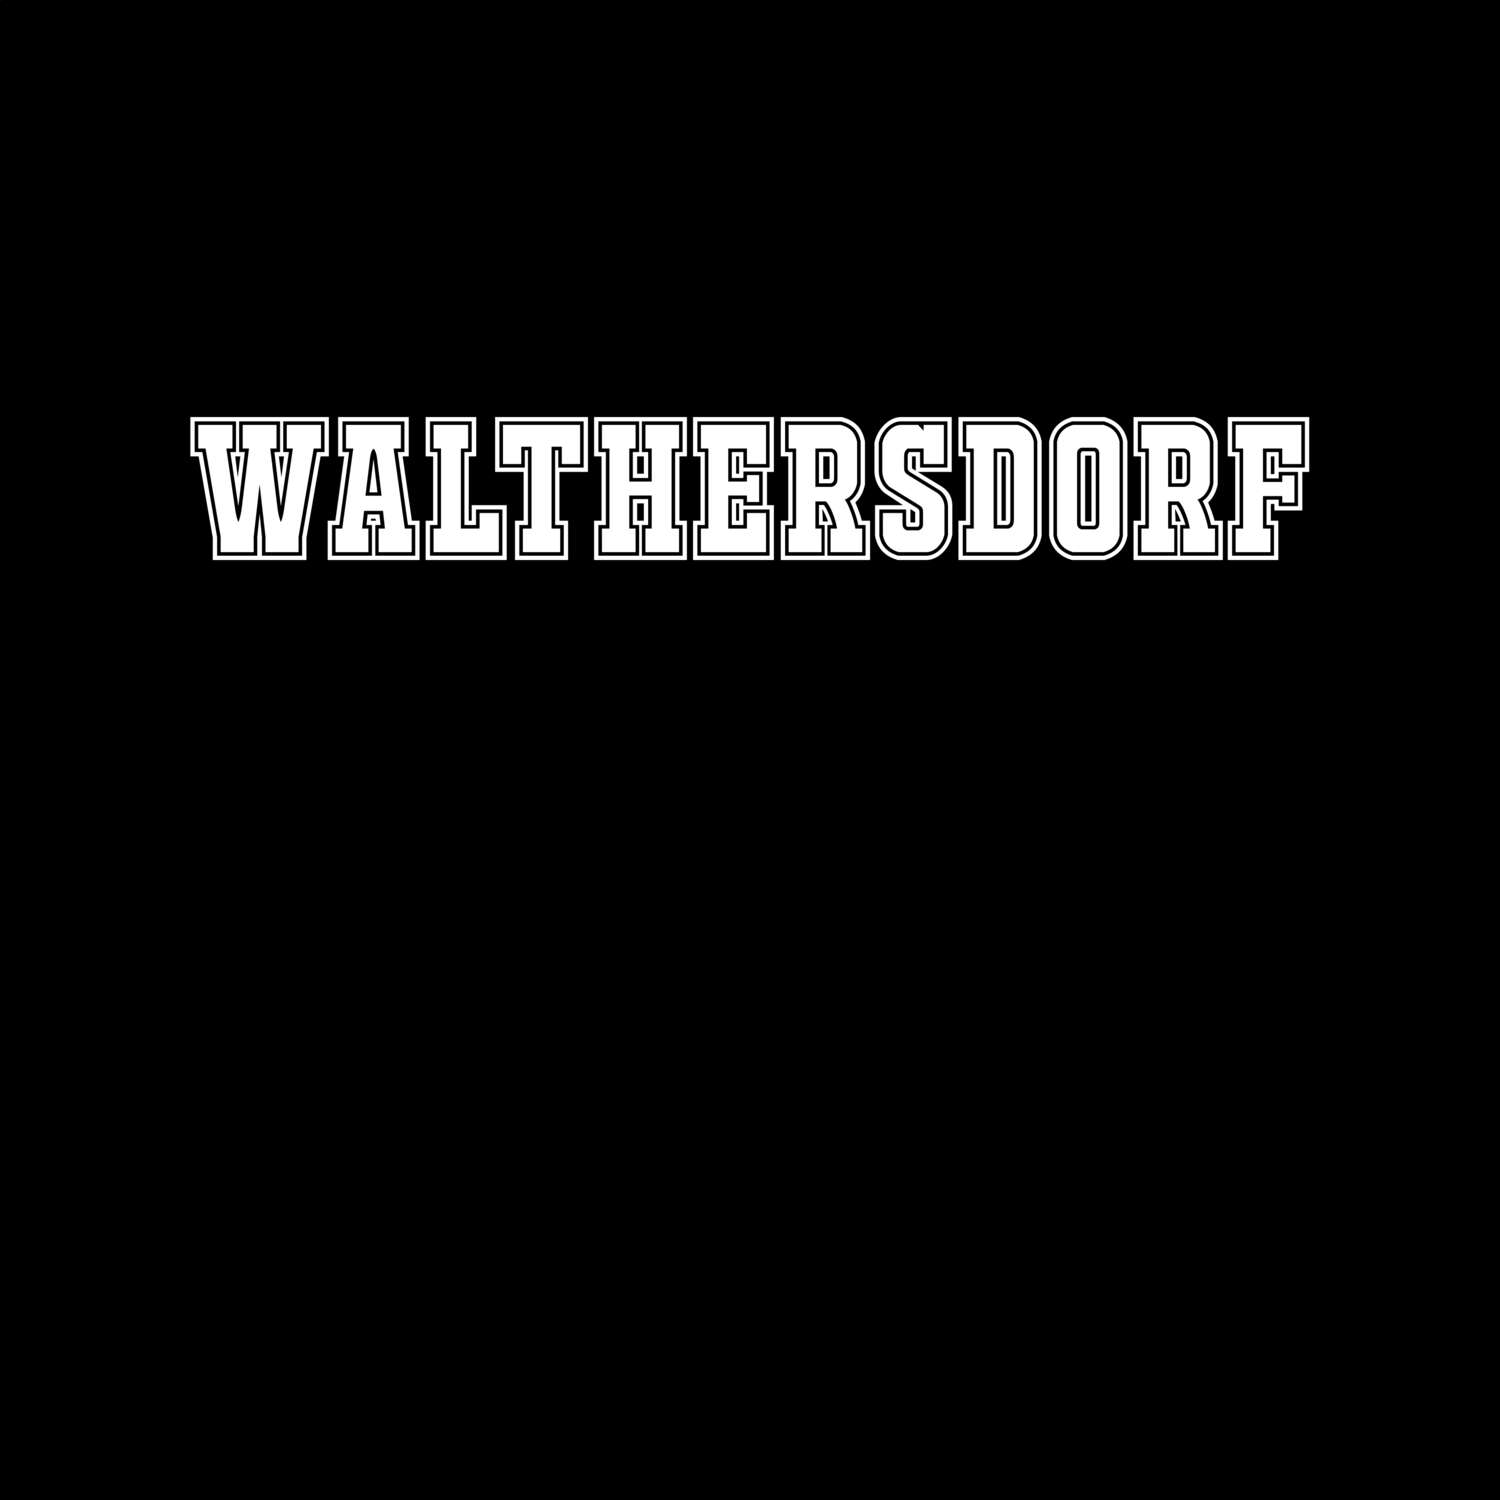 Walthersdorf T-Shirt »Classic«